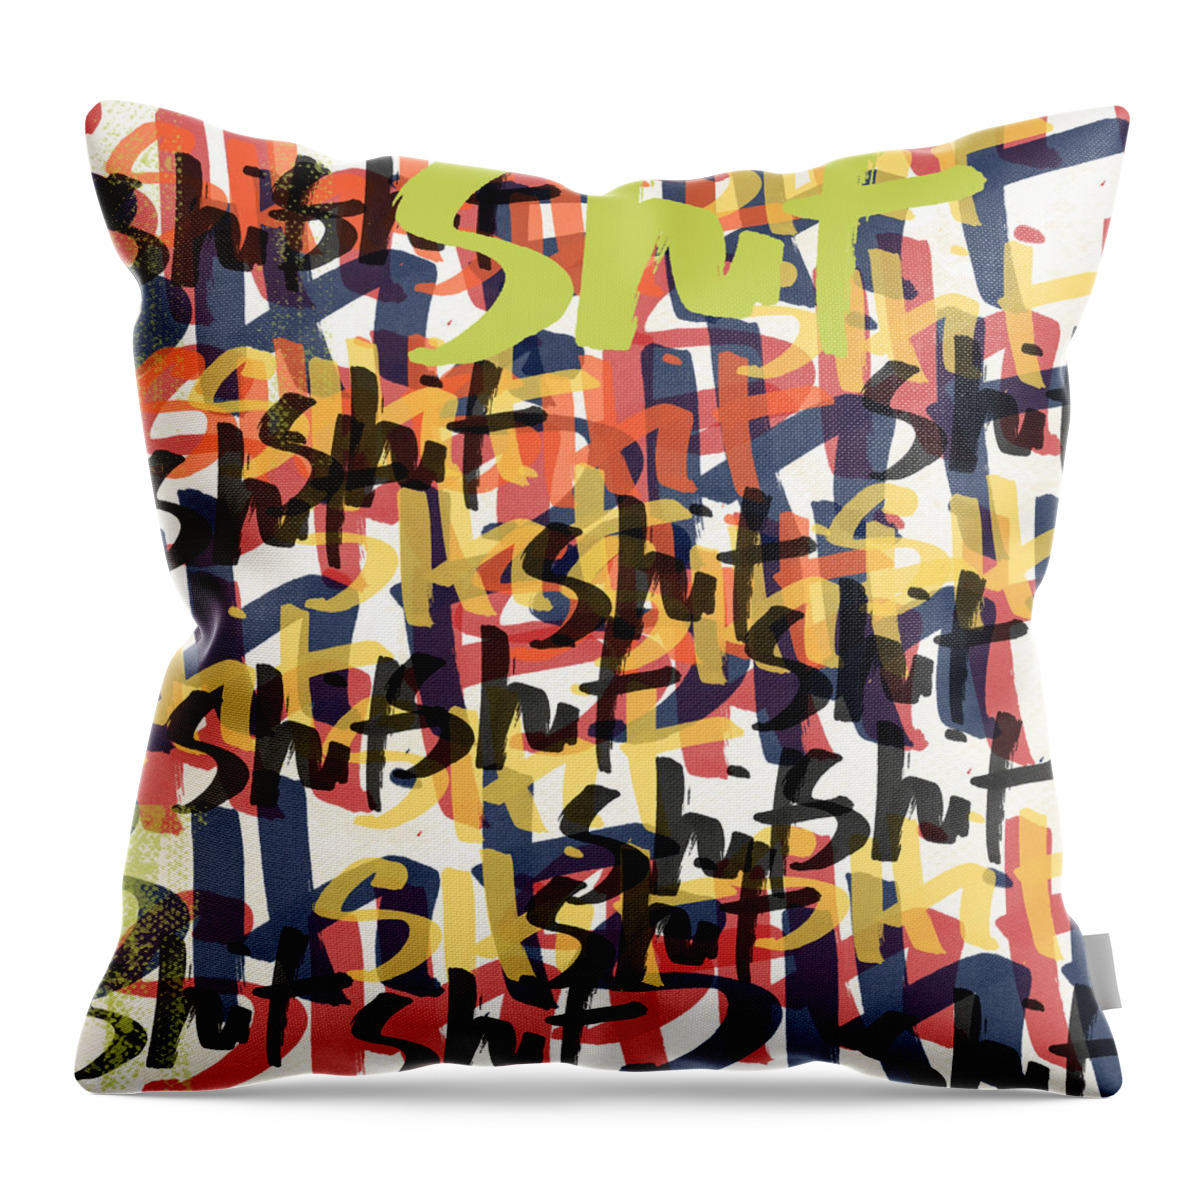 Tantrum Throw Pillow featuring the mixed media Tantrum- Art by Linda Woods by Linda Woods